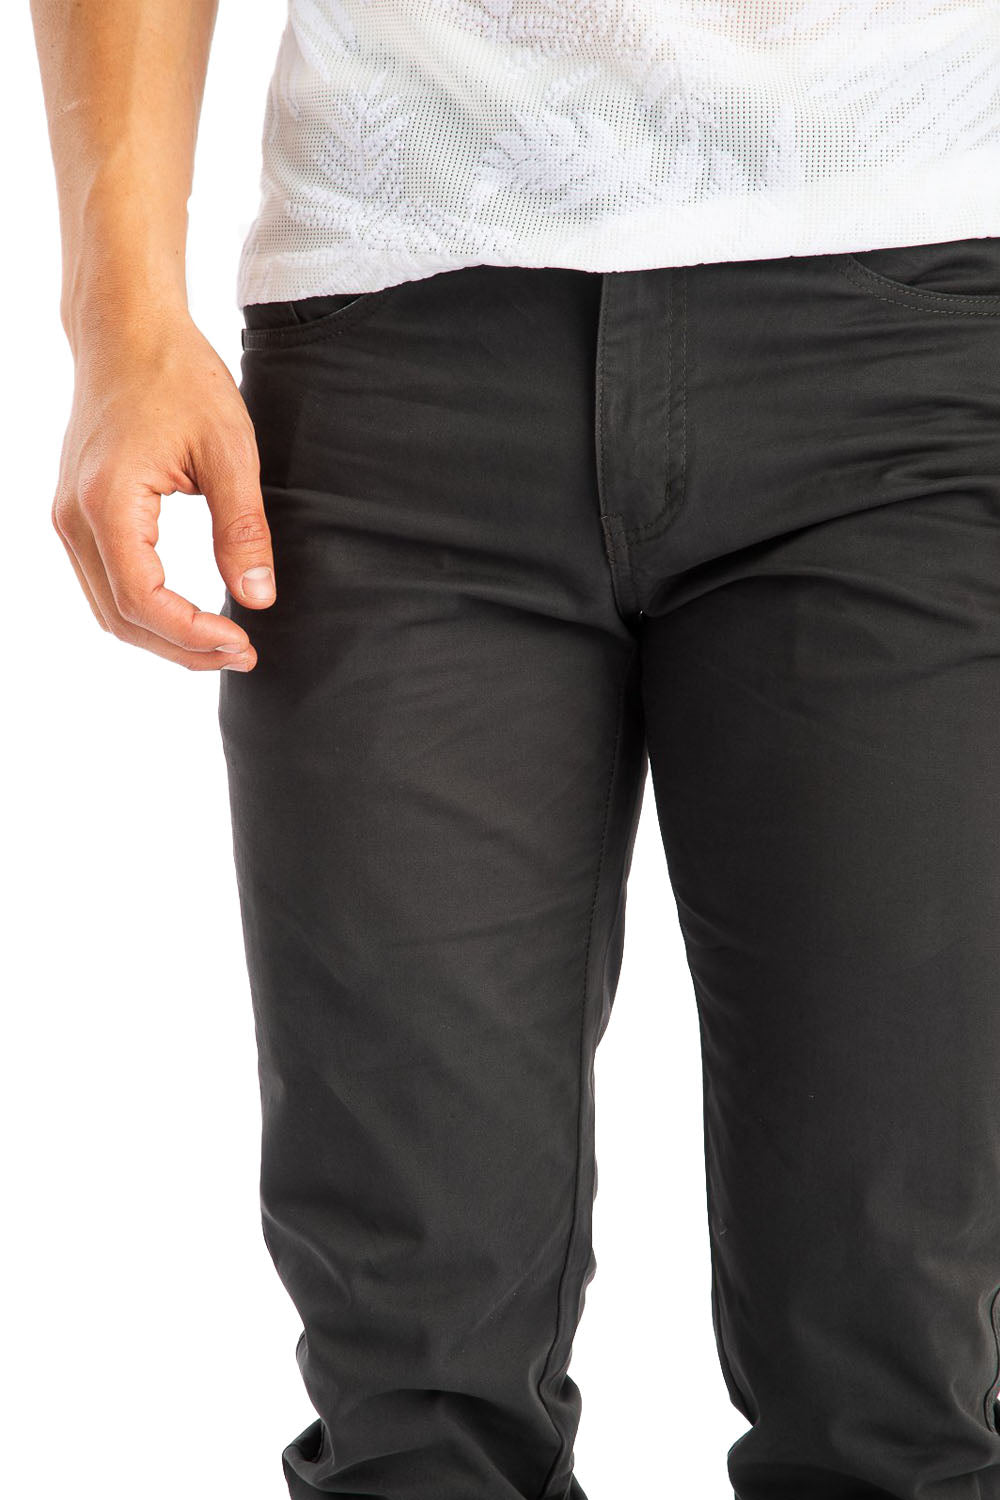 BARABAS Men's Khaki Relaxed Fit Denim Jeans Pants CP4001 Grey